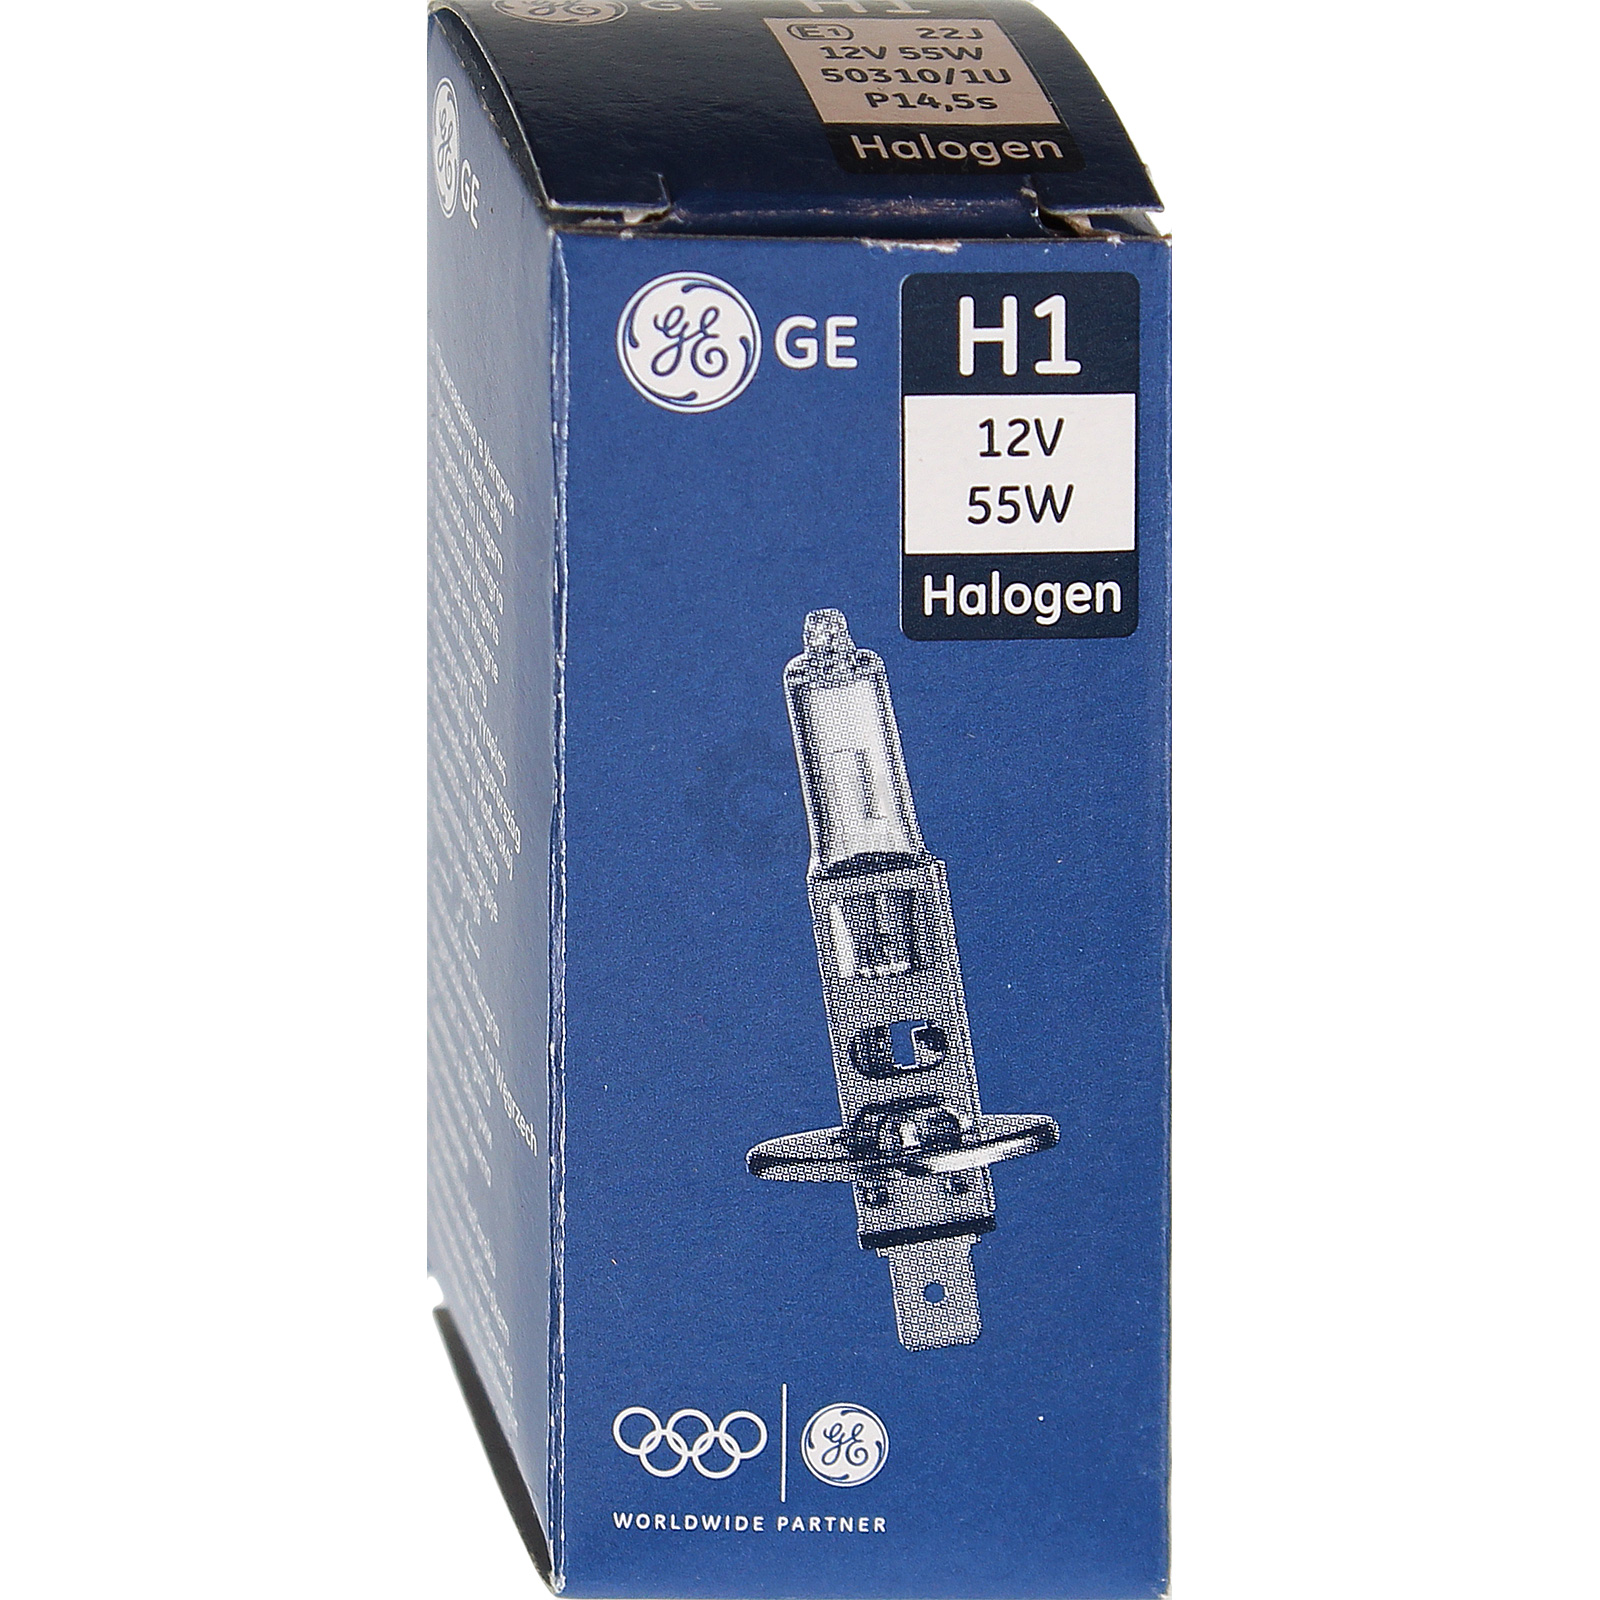 GE General Electric Halogen H1 12V 55W Sockel P14,5s mit 1550Lumen